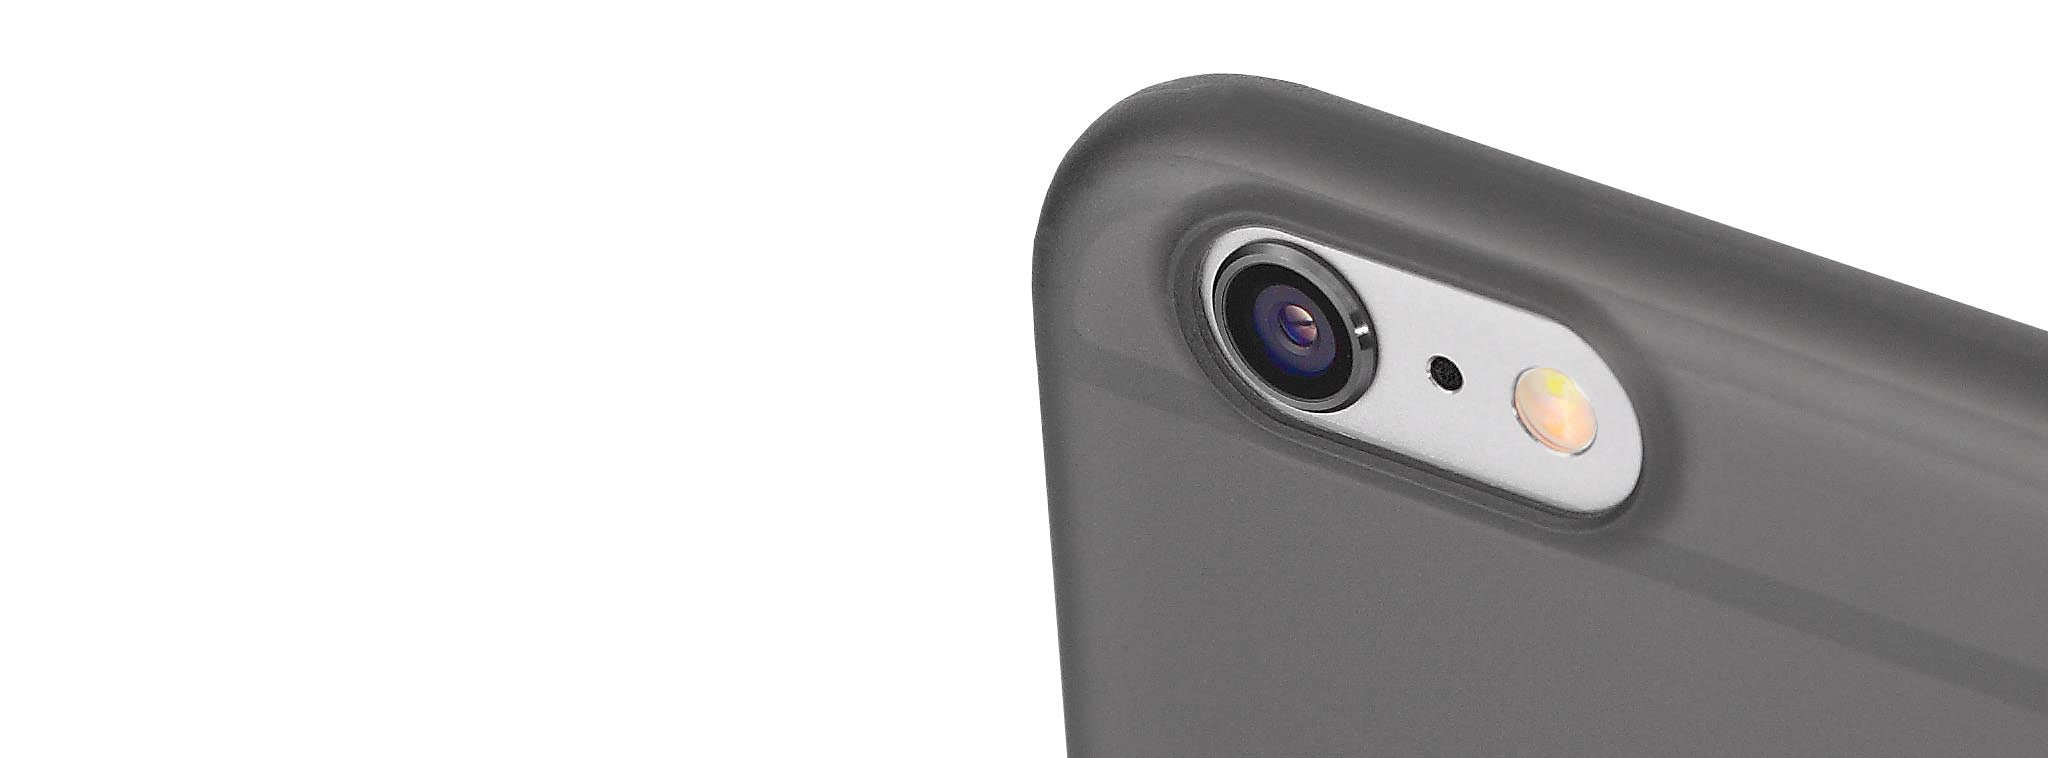 Veil XT | Ultra thin iPhone 6 case | Camera hole